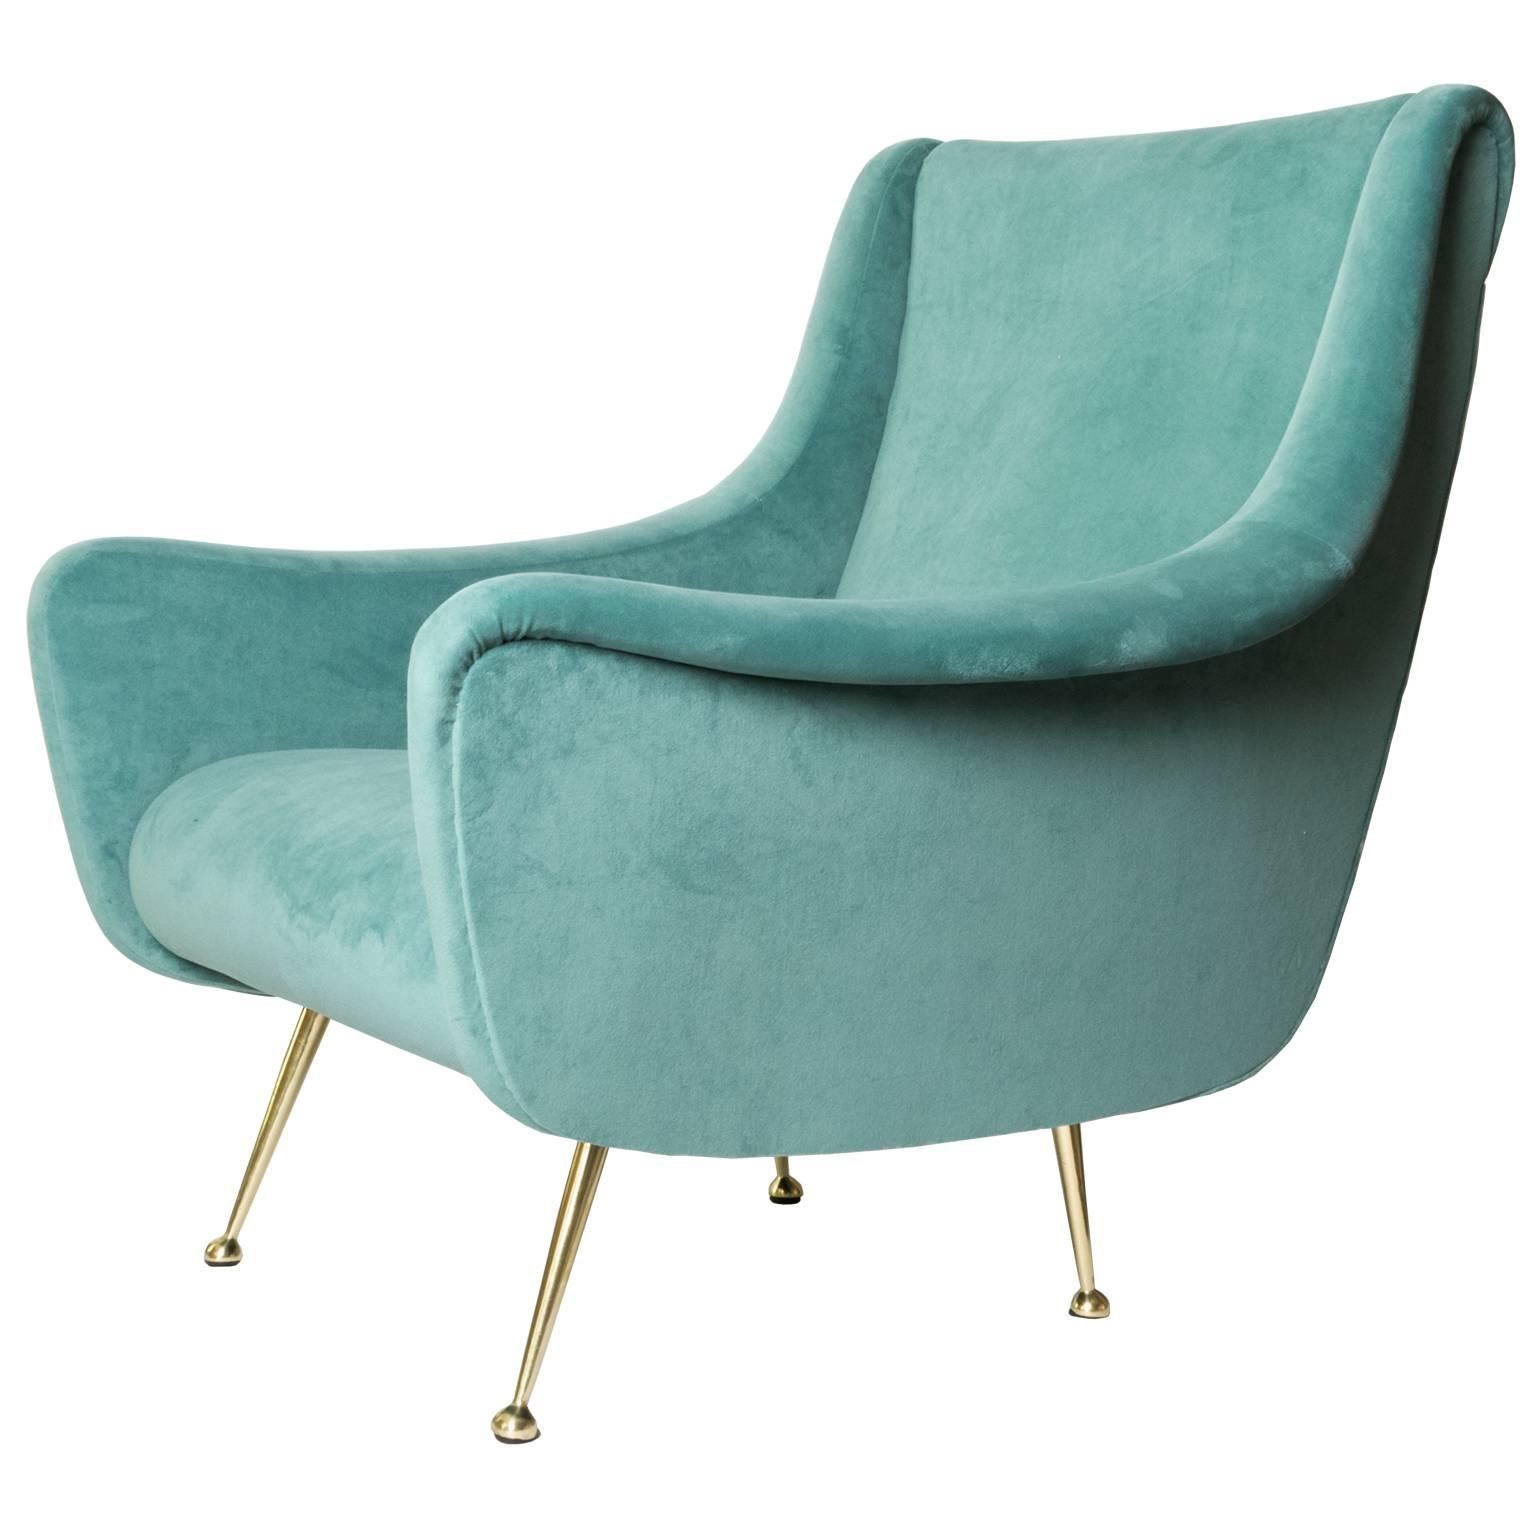 Italian Midcentury Modern Lenzi Upholstered Lounge Chair with Brass Legs